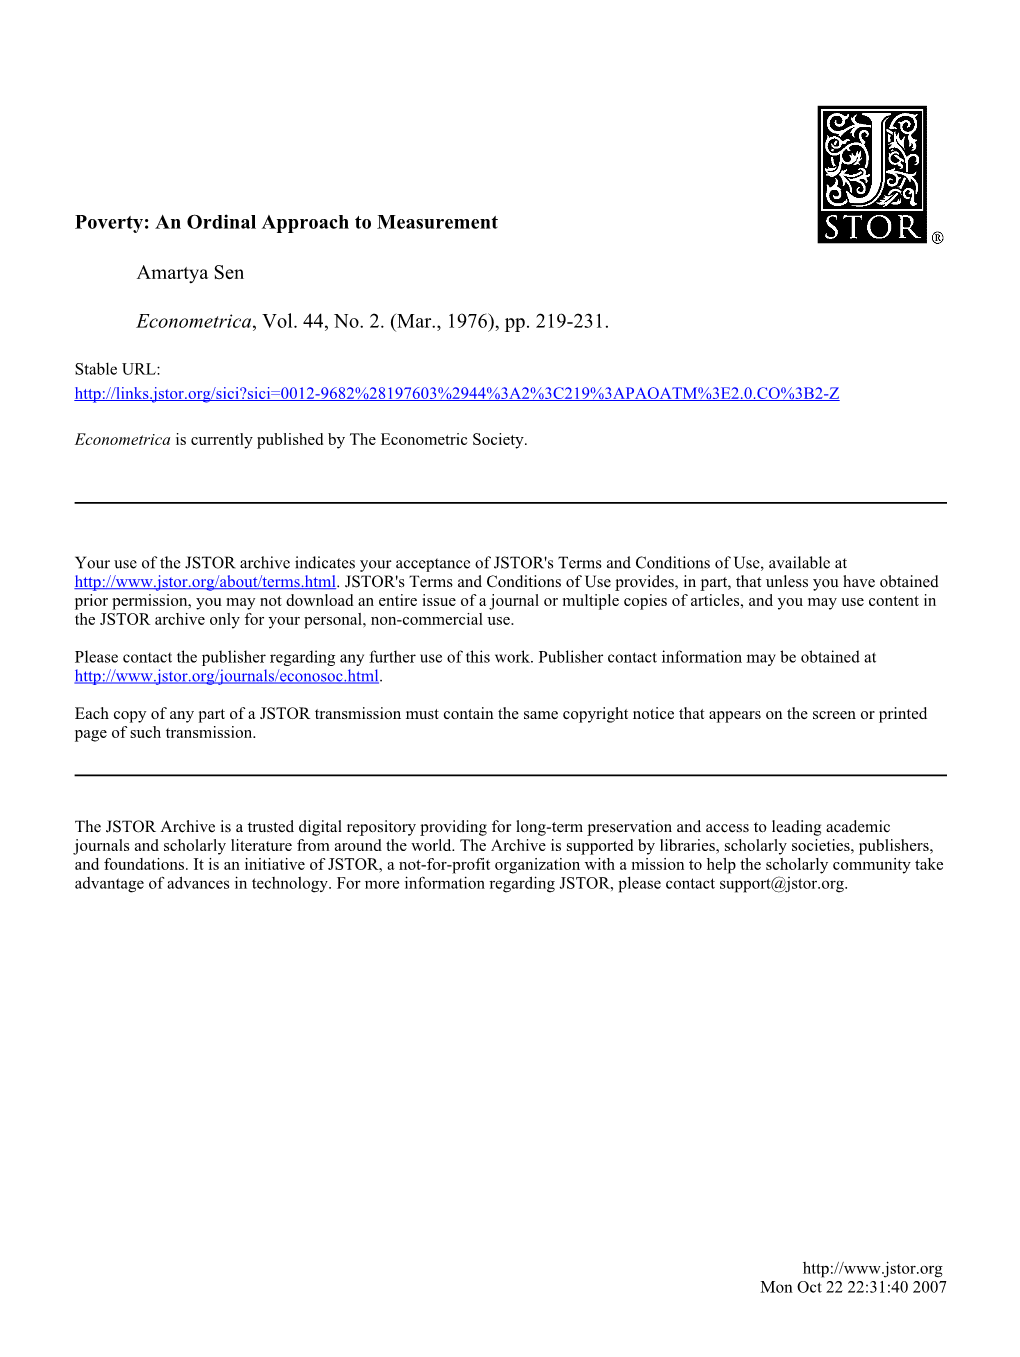 An Ordinal Approach to Measurement Amartya Sen Econometrica, Vol. 44, No